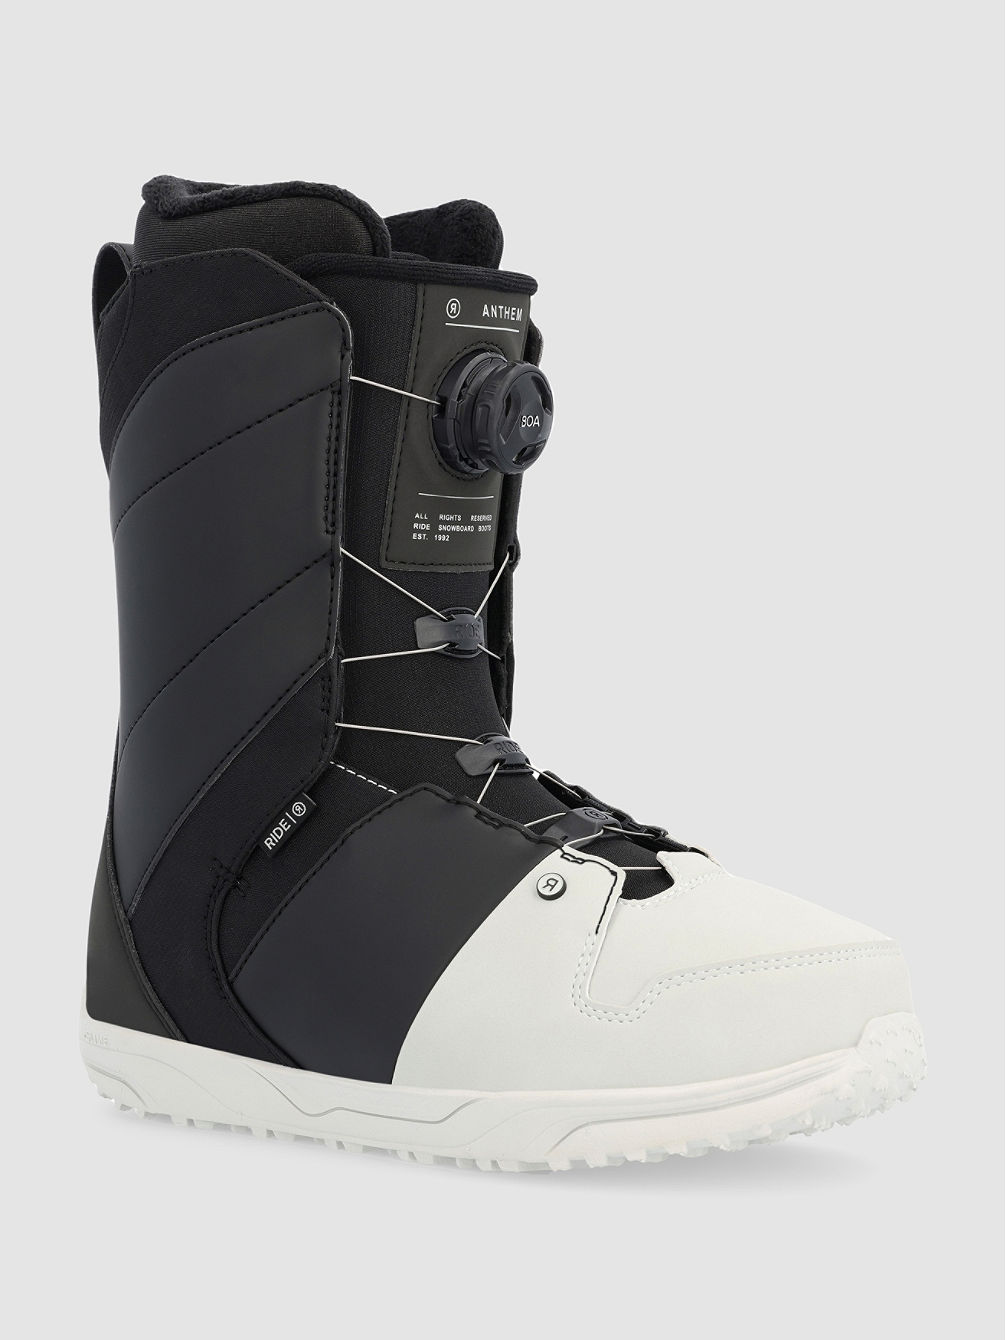 Anthem 2023 Snowboard-Boots